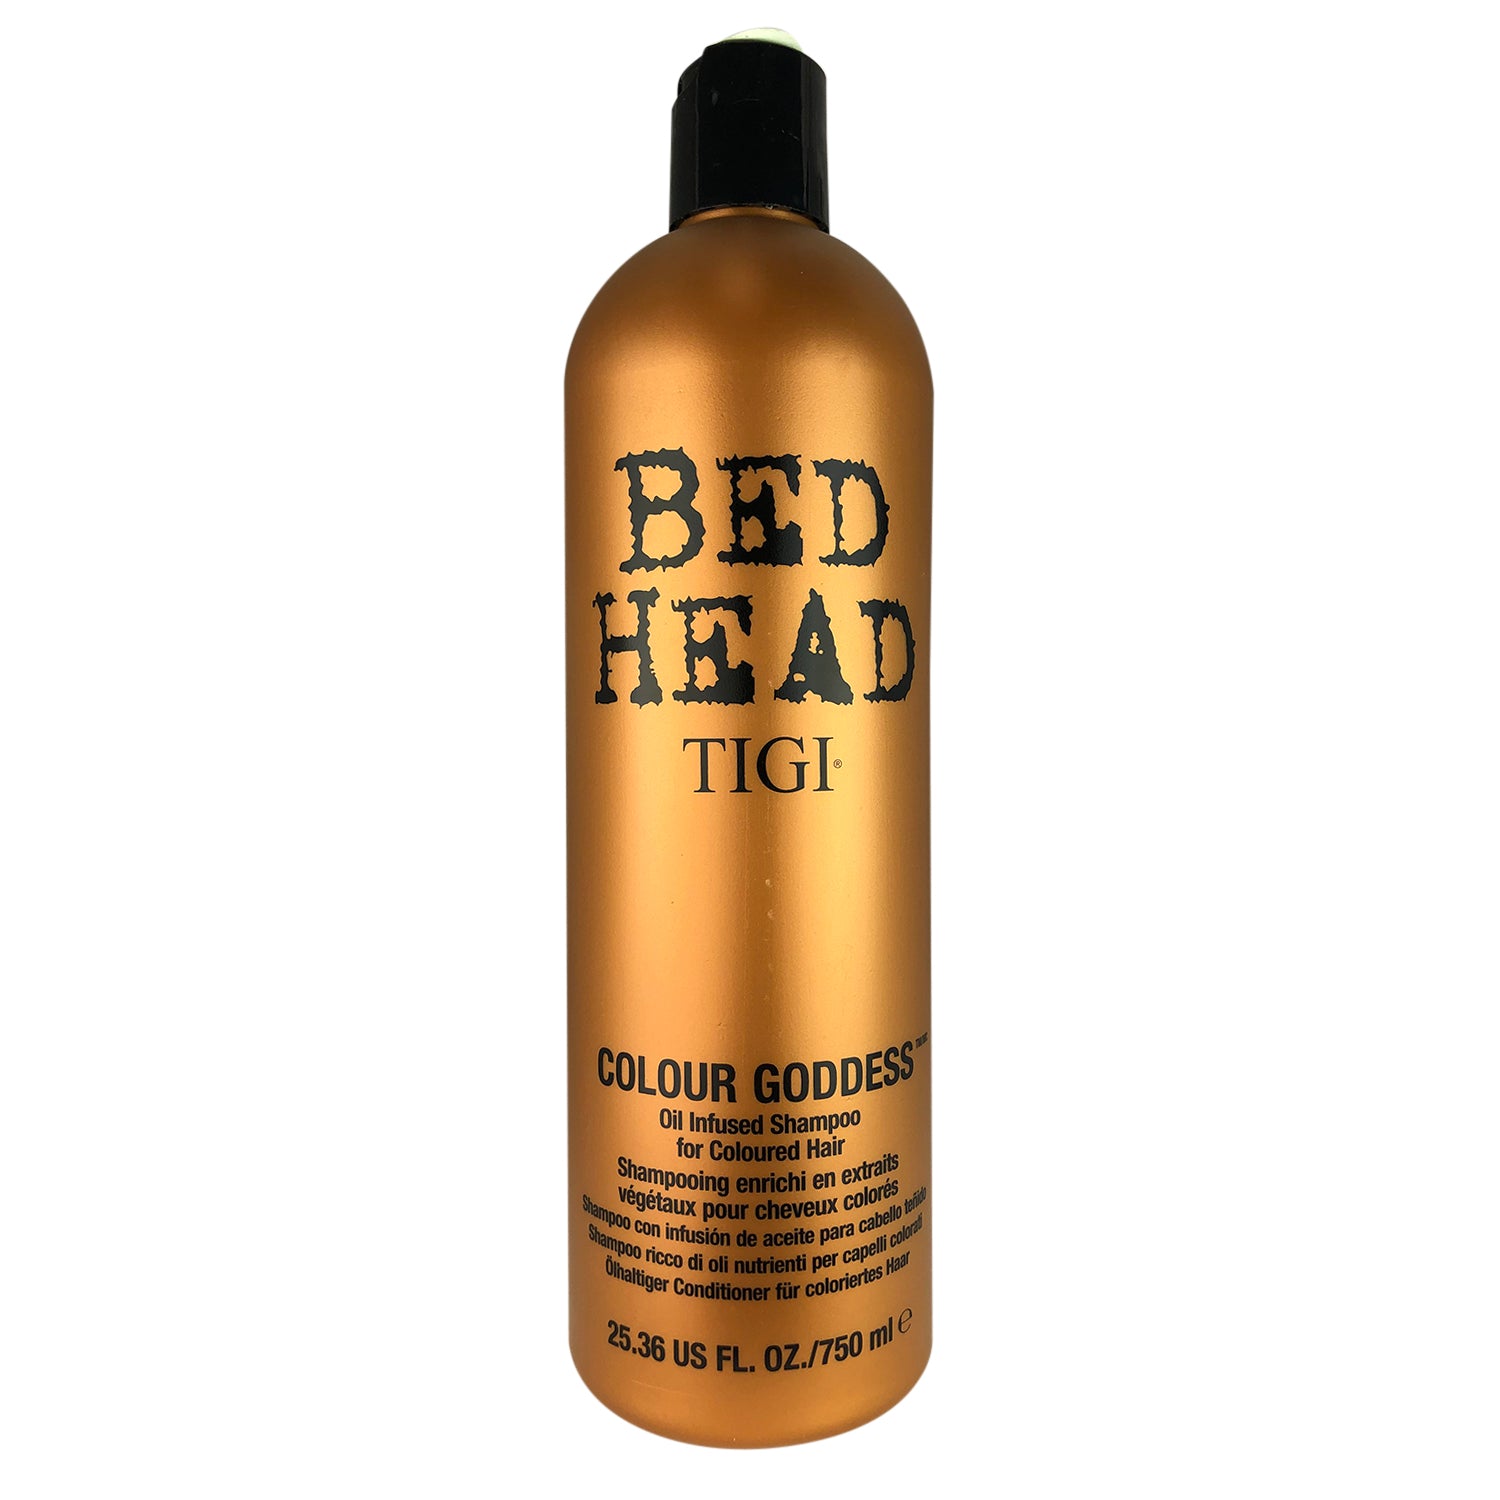 Bed Head Tigi Colour Goddess Shampoo for Colored Hair 25.36 oz